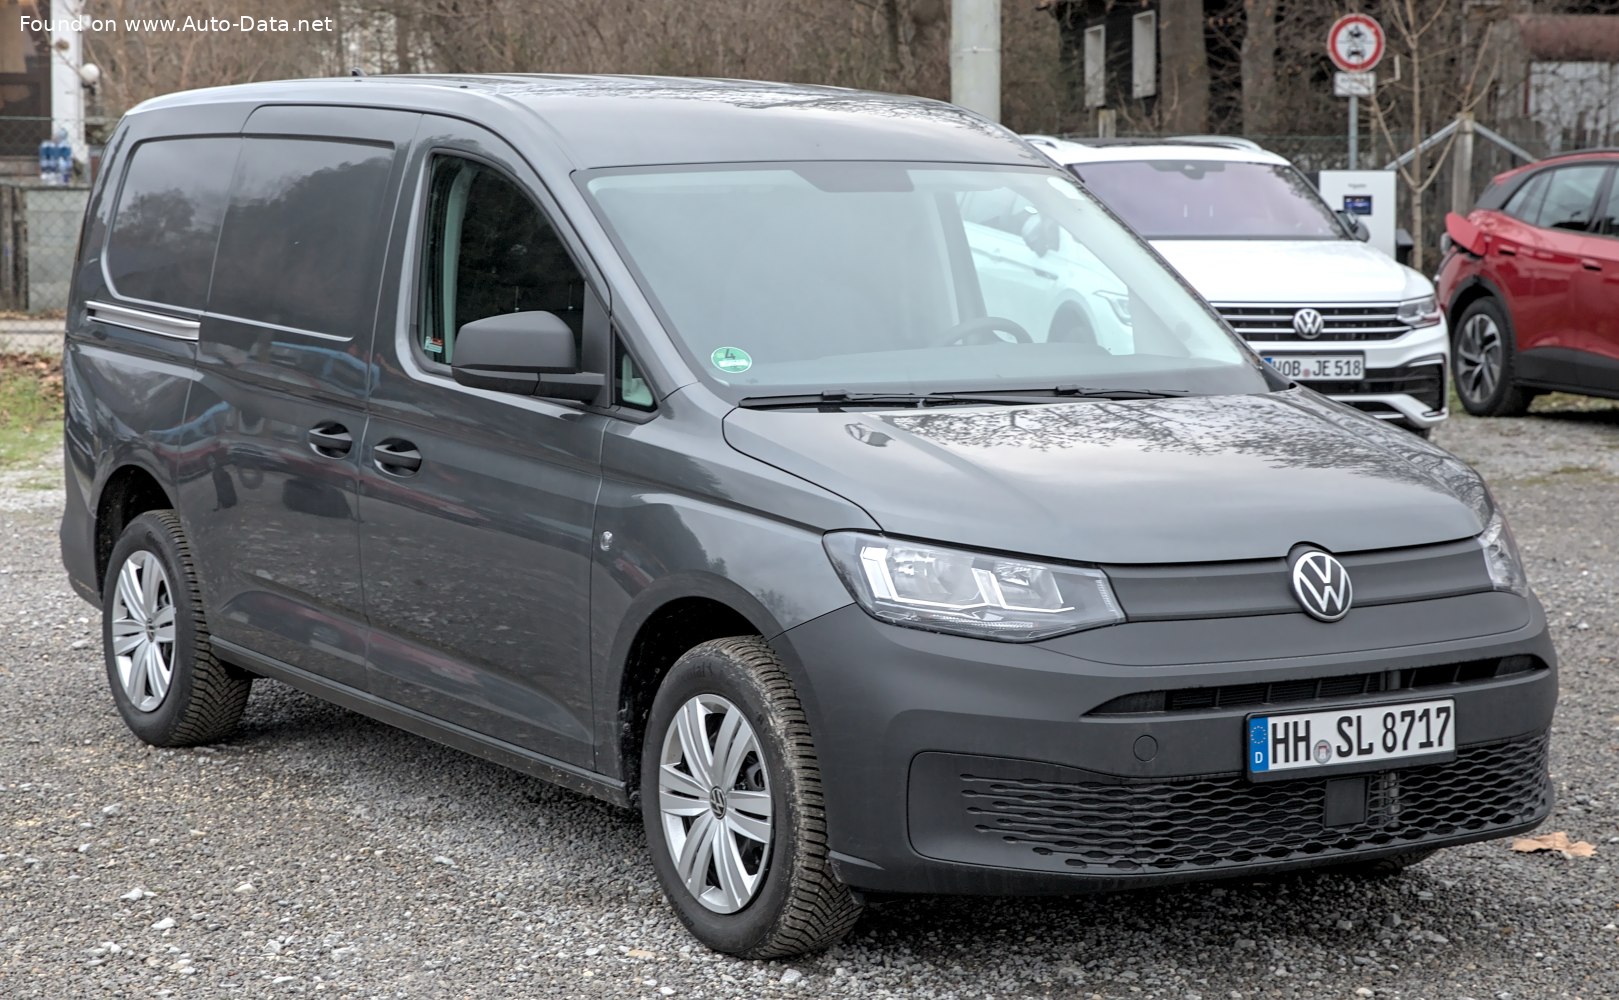 Volkswagen Caddy  Technical Specs, Fuel consumption, Dimensions